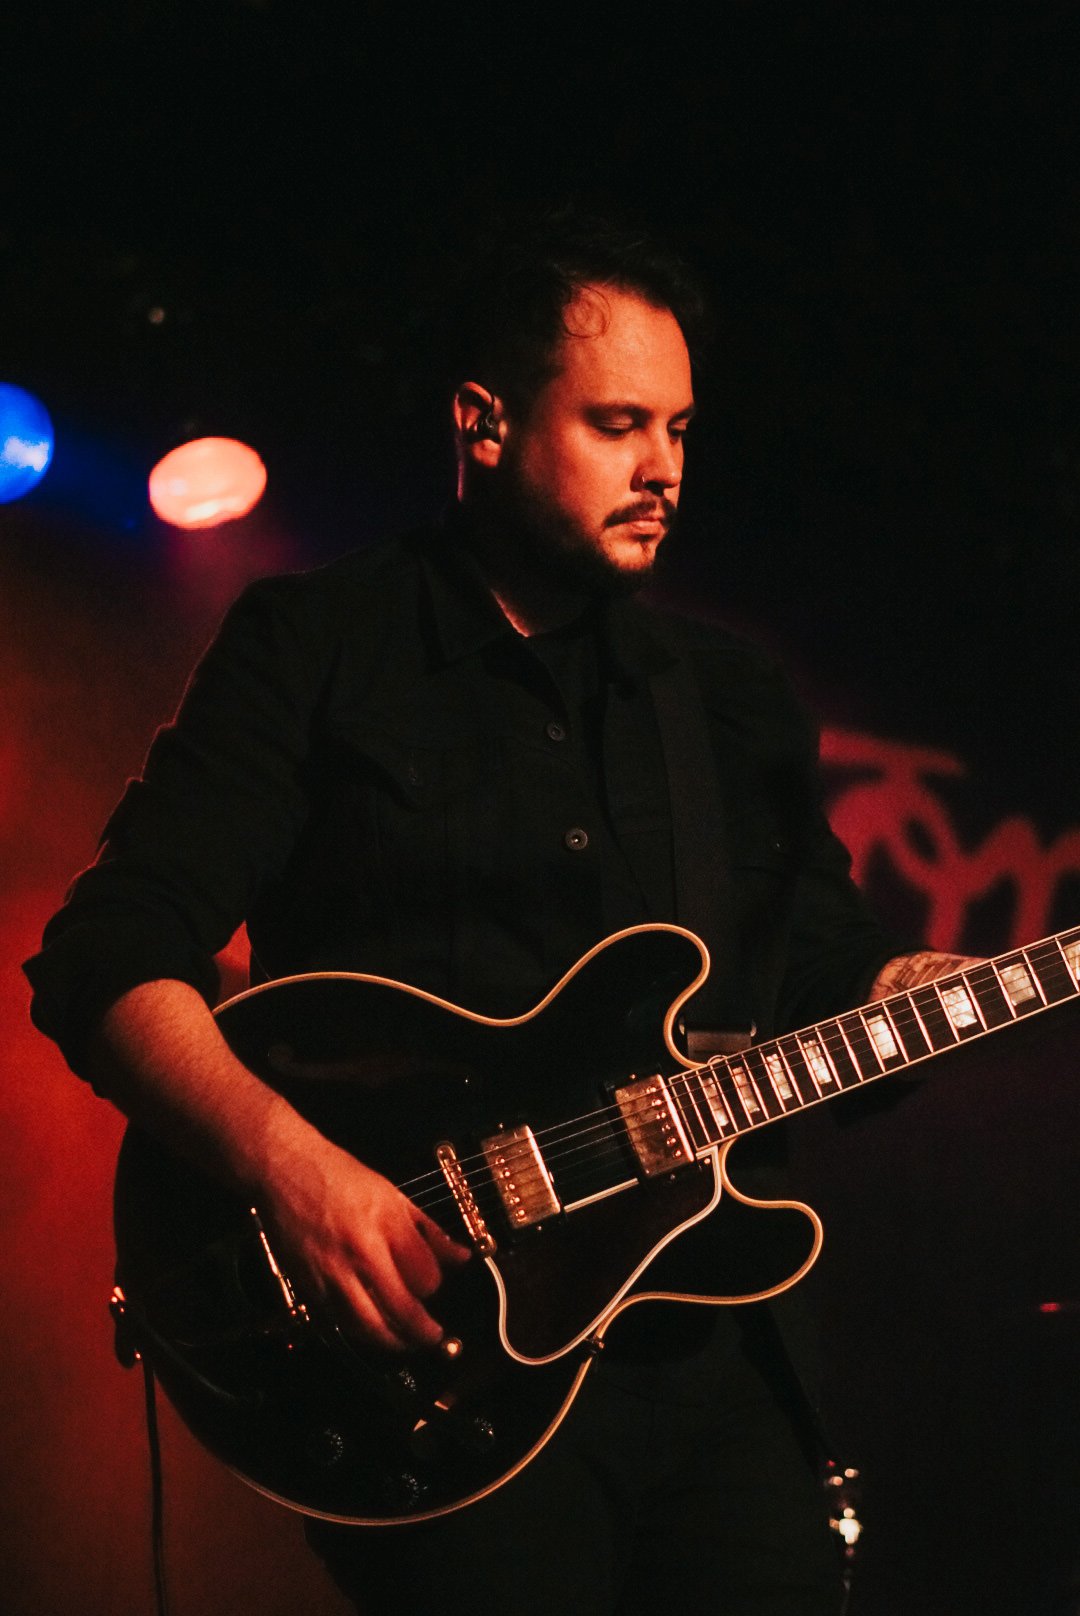  Guitarist of BANNERS performs at Antone’s Nightclub. 